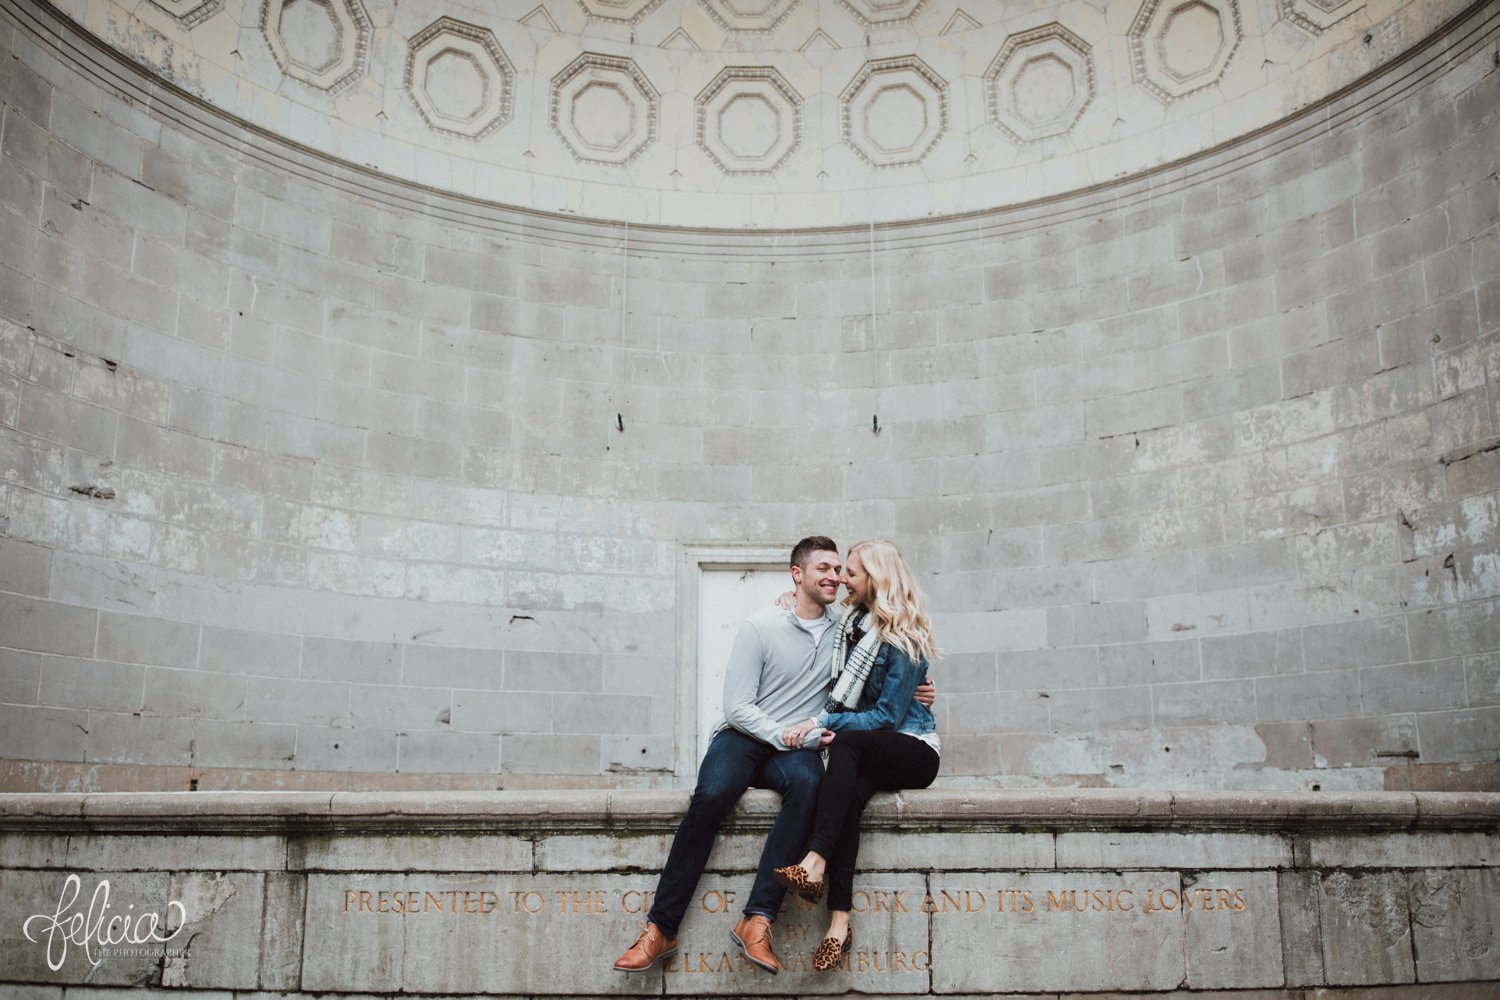 images by feliciathephotographer.com | destination wedding photographer | engagement | new york city | central park | casual | classic | true love | romantic | diamond ring | urban | joyful | cheetah shoes | scarf | sweet |